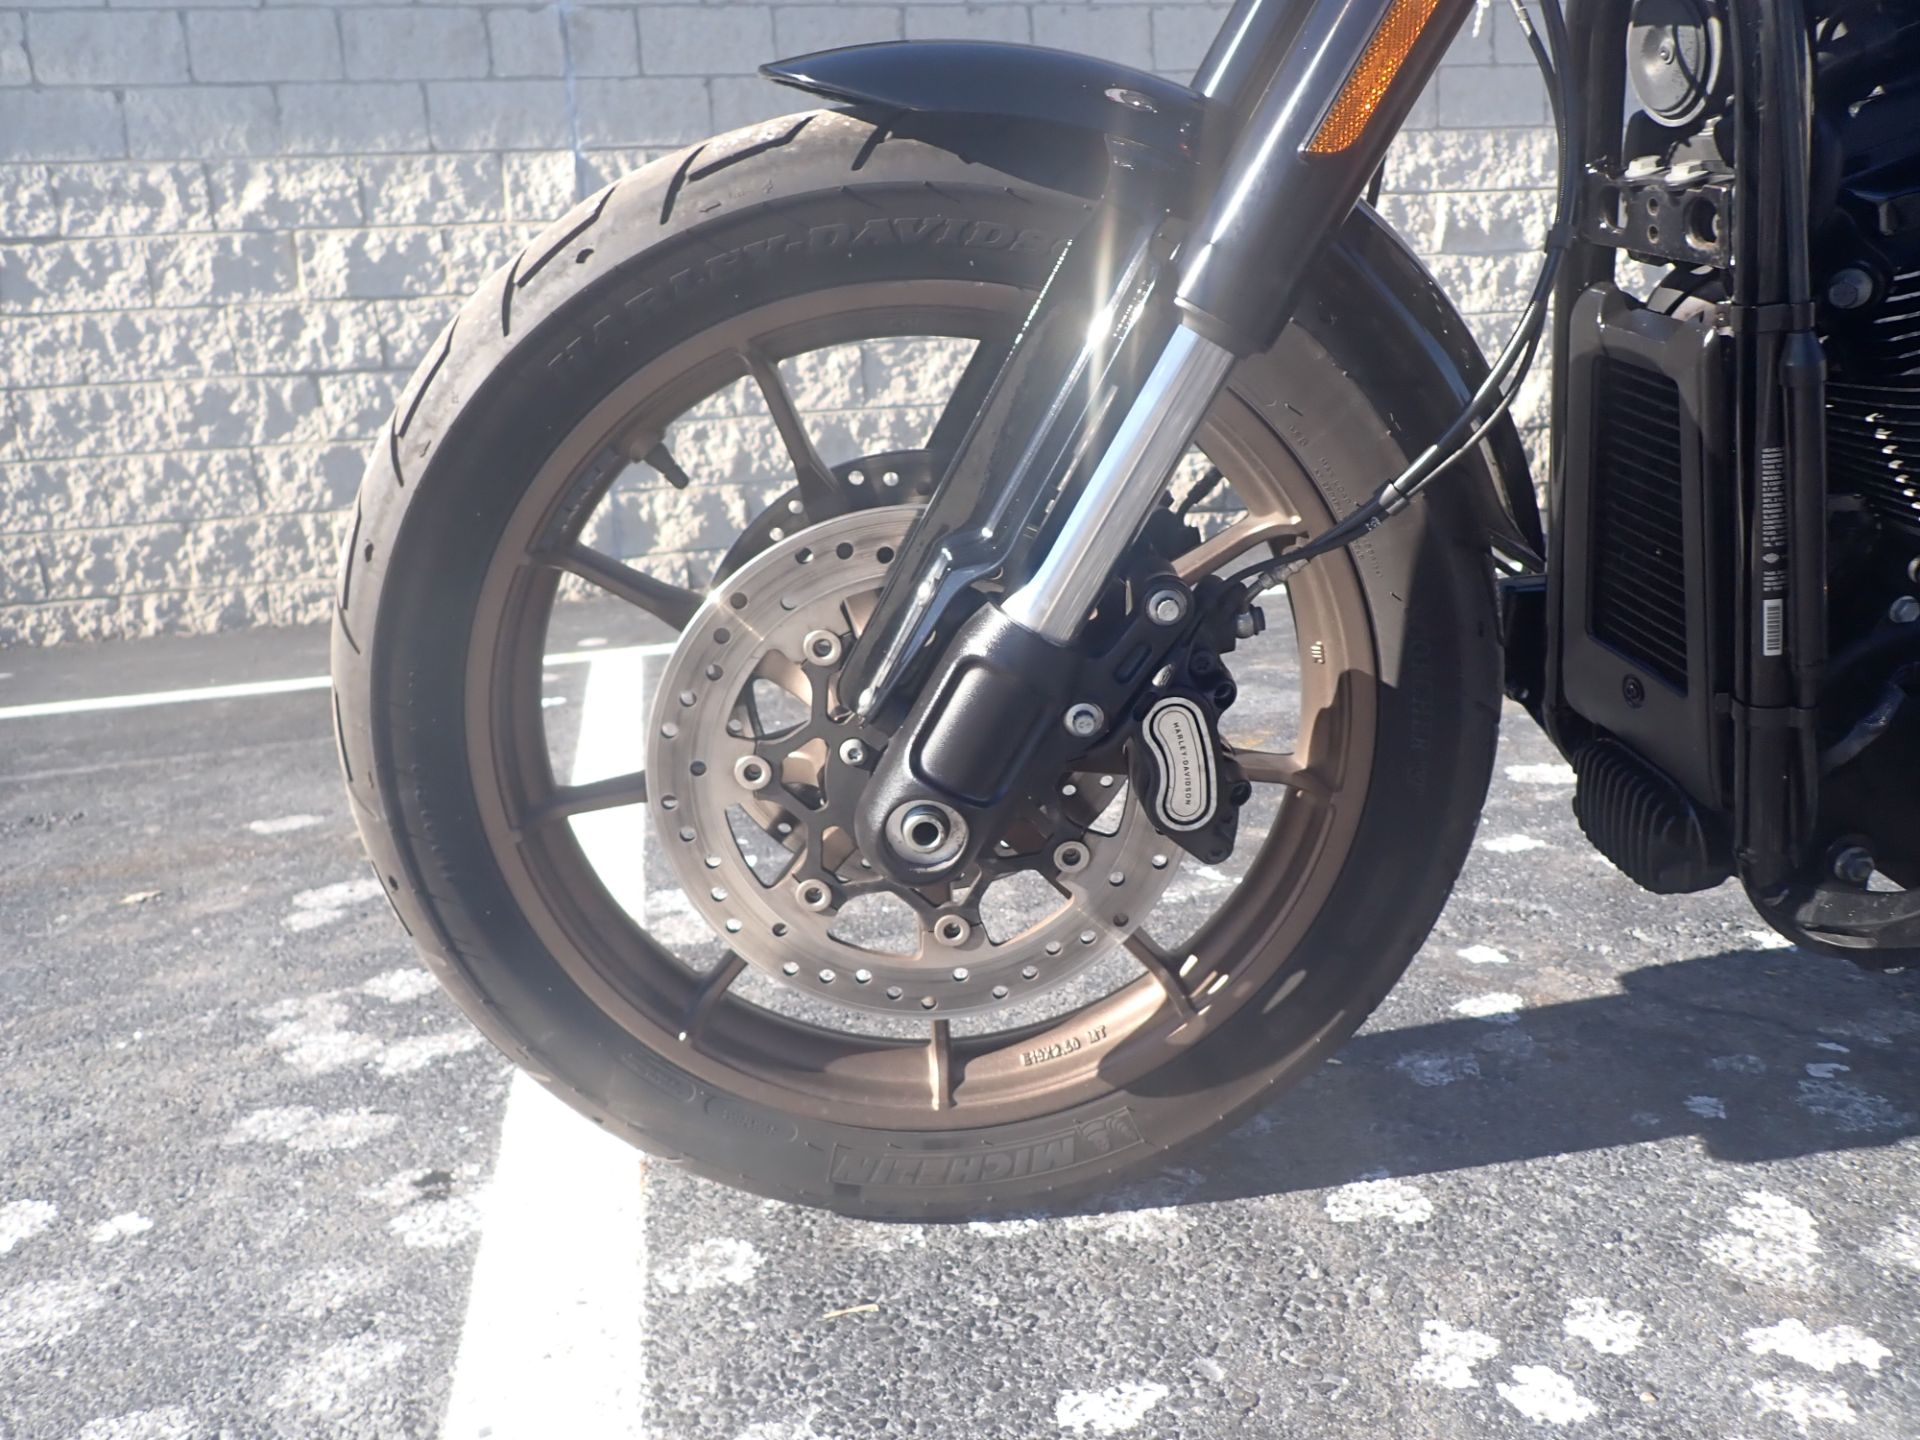 2020 Harley-Davidson Low Rider®S in Massillon, Ohio - Photo 9